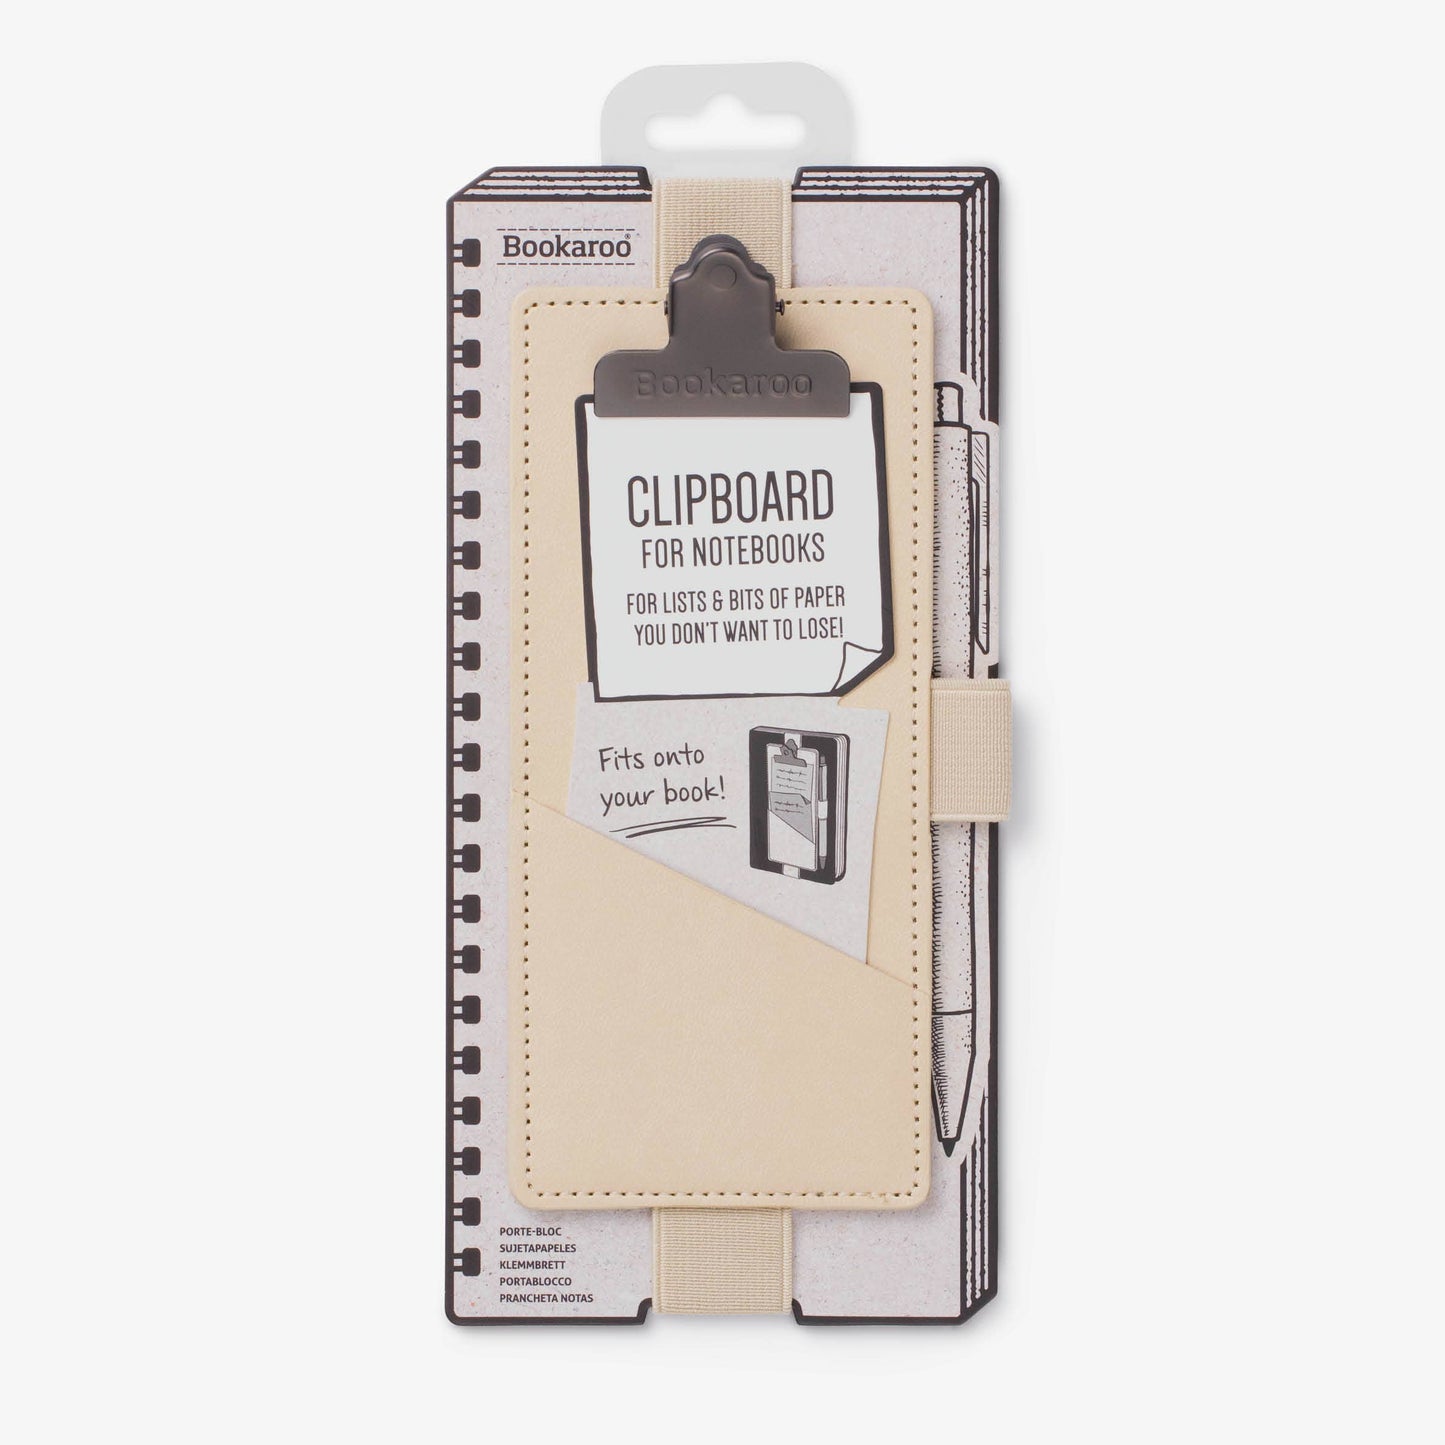 Bookaroo Clipboard for Notebooks - Cream